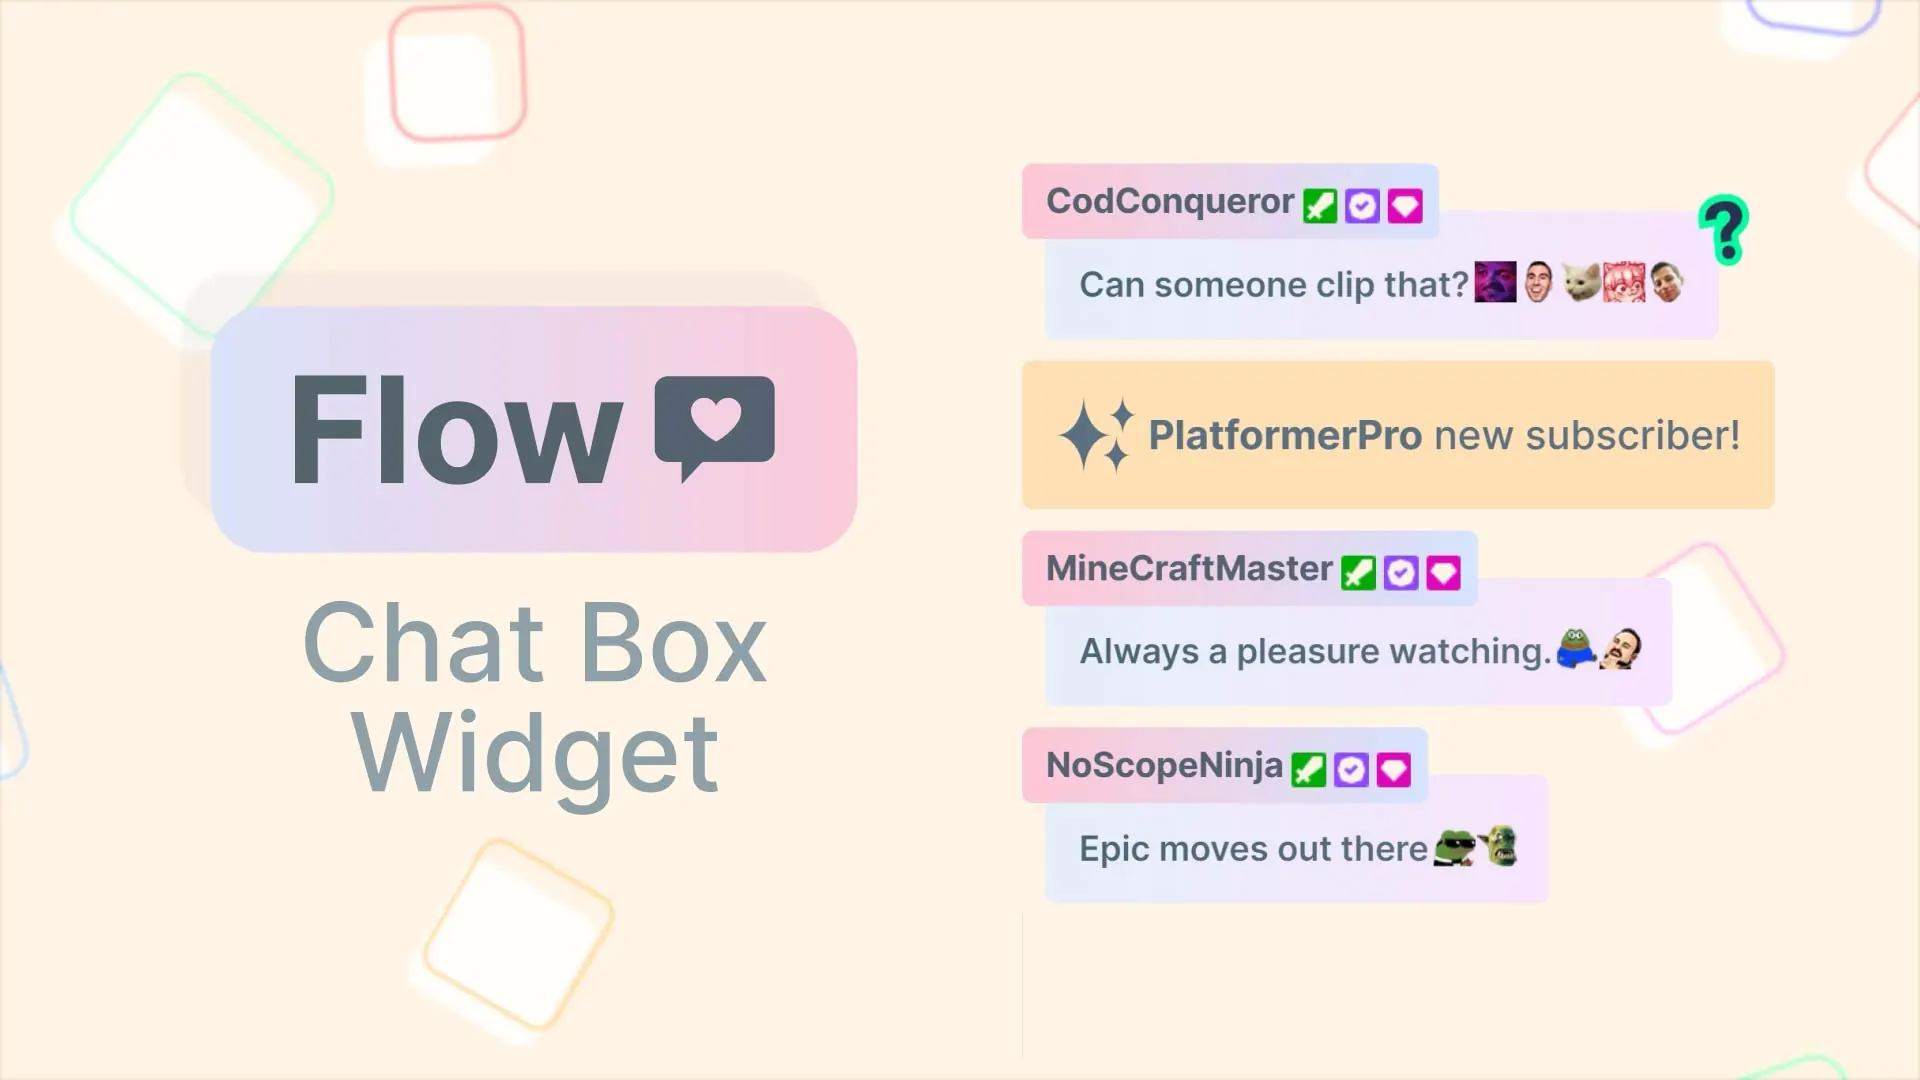 Flow - Twitch Chat Box